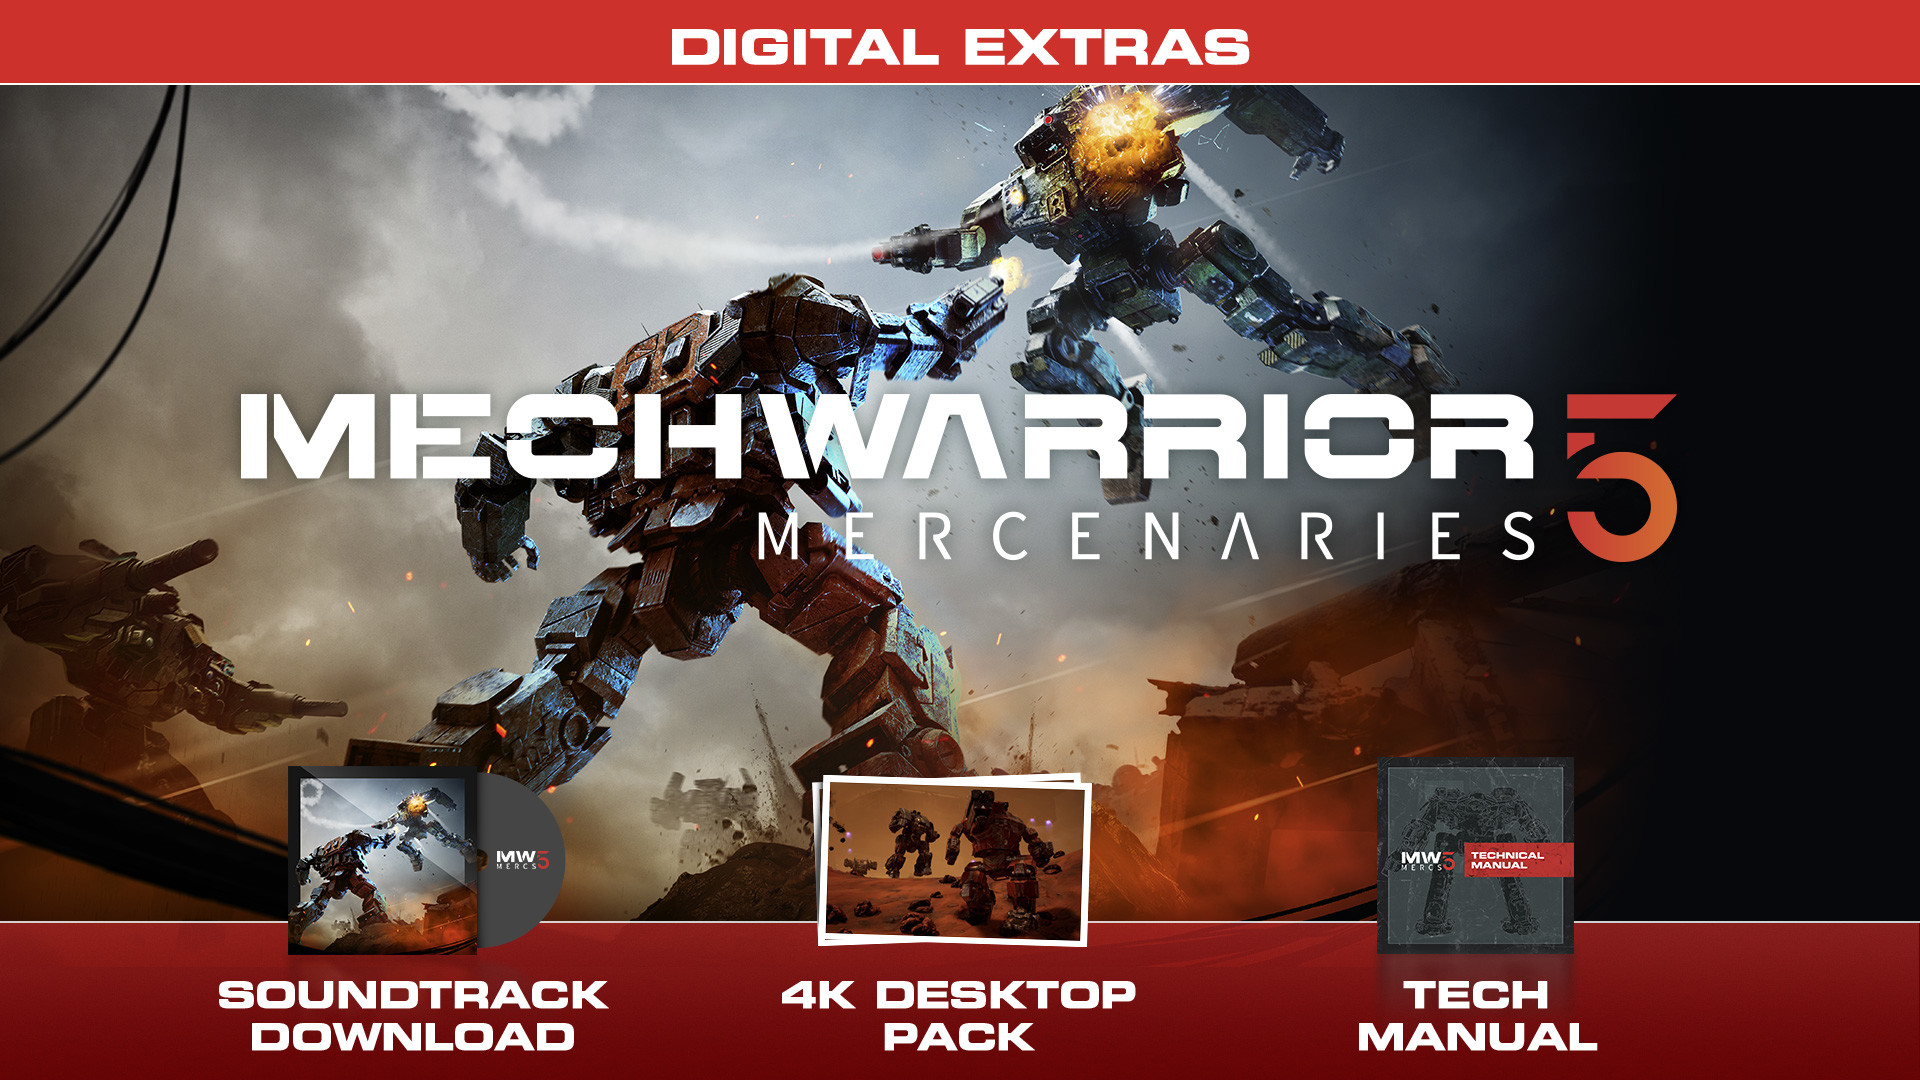 MechWarrior 5: Mercenaries - Digital Extras Content Featured Screenshot #1